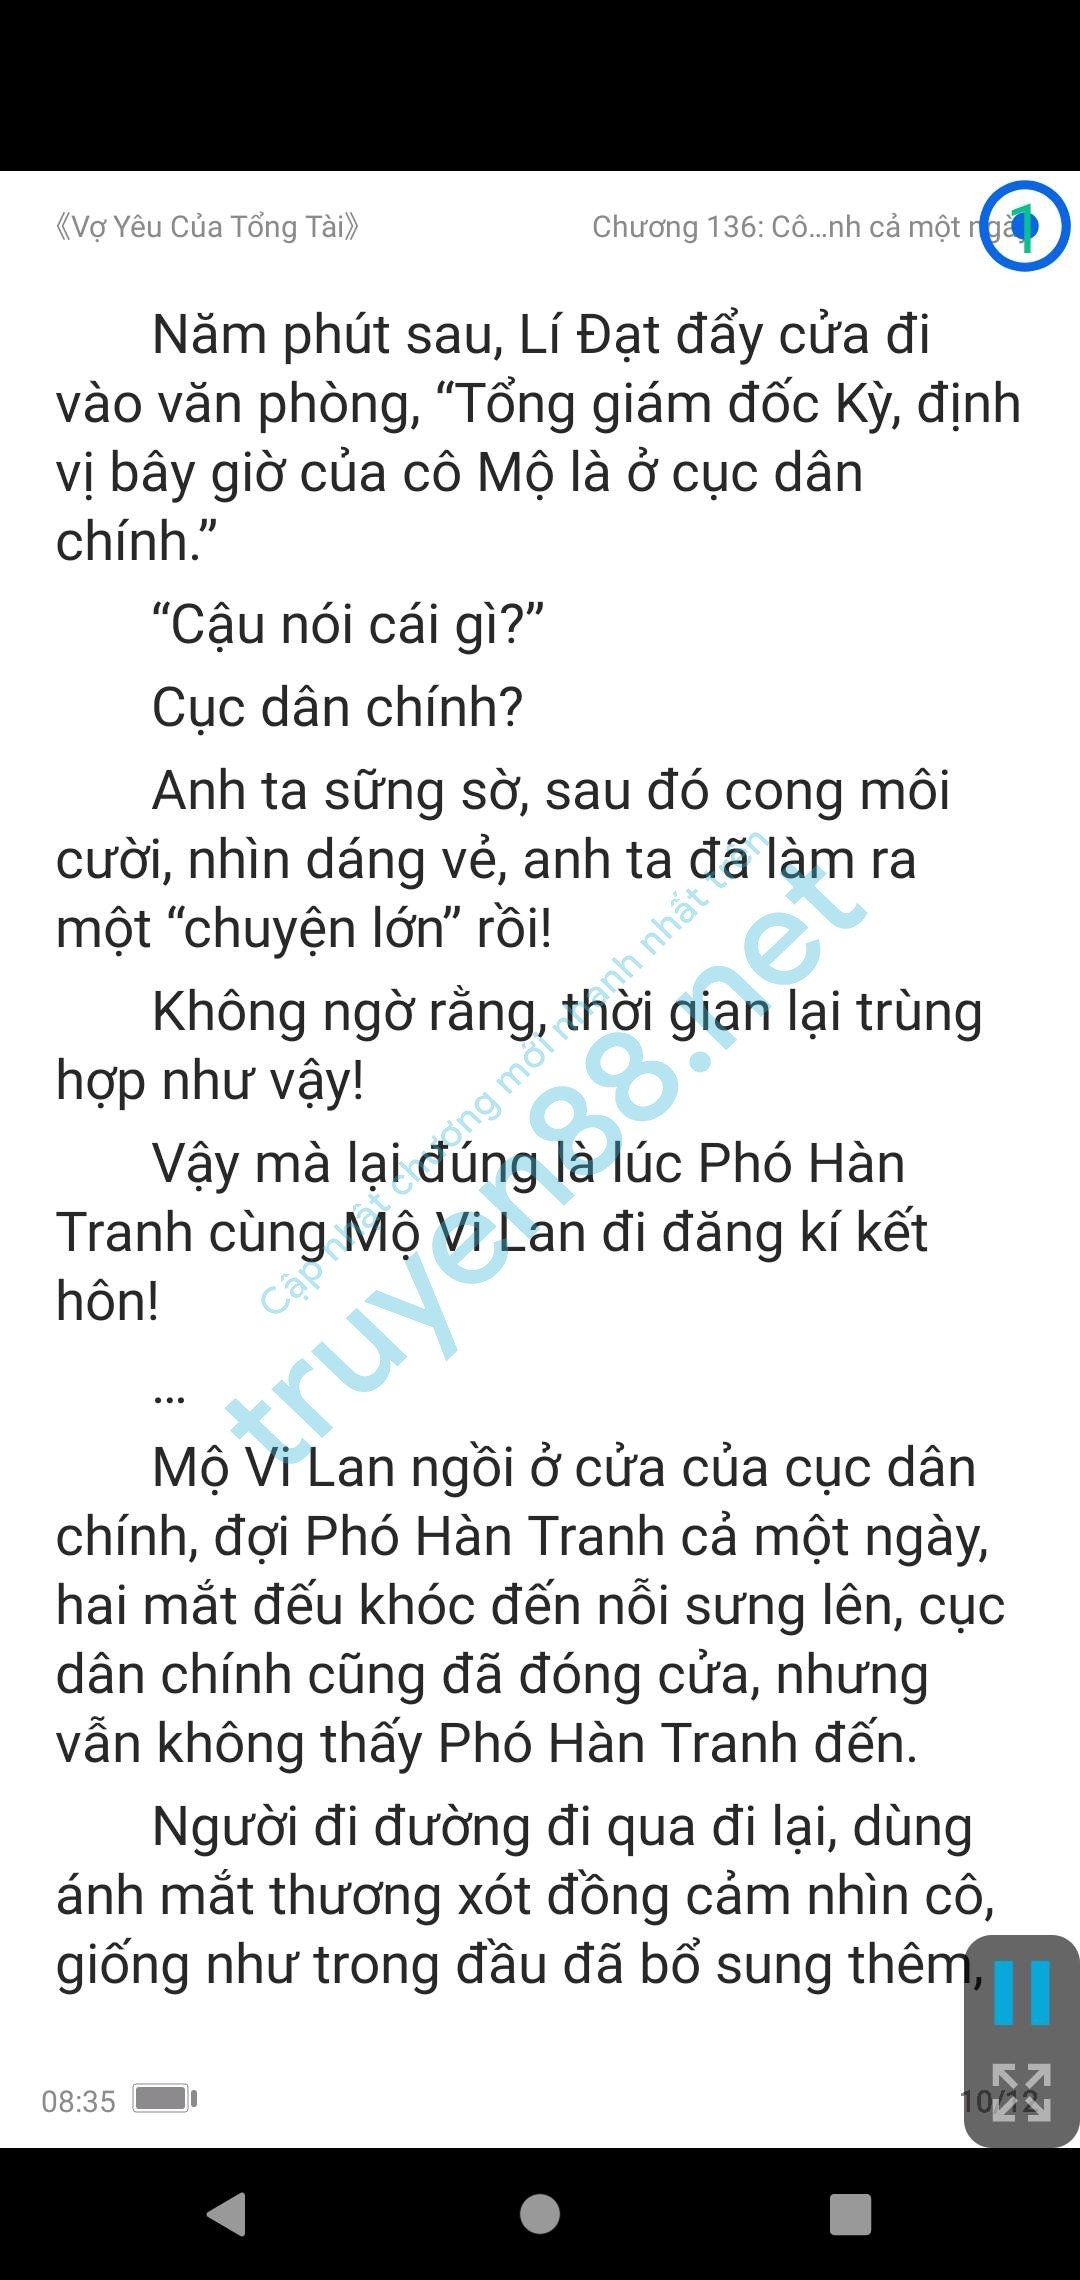 vo-yeu-cua-tong-tai-mo-vi-lan--pho-han-tranh-136-1